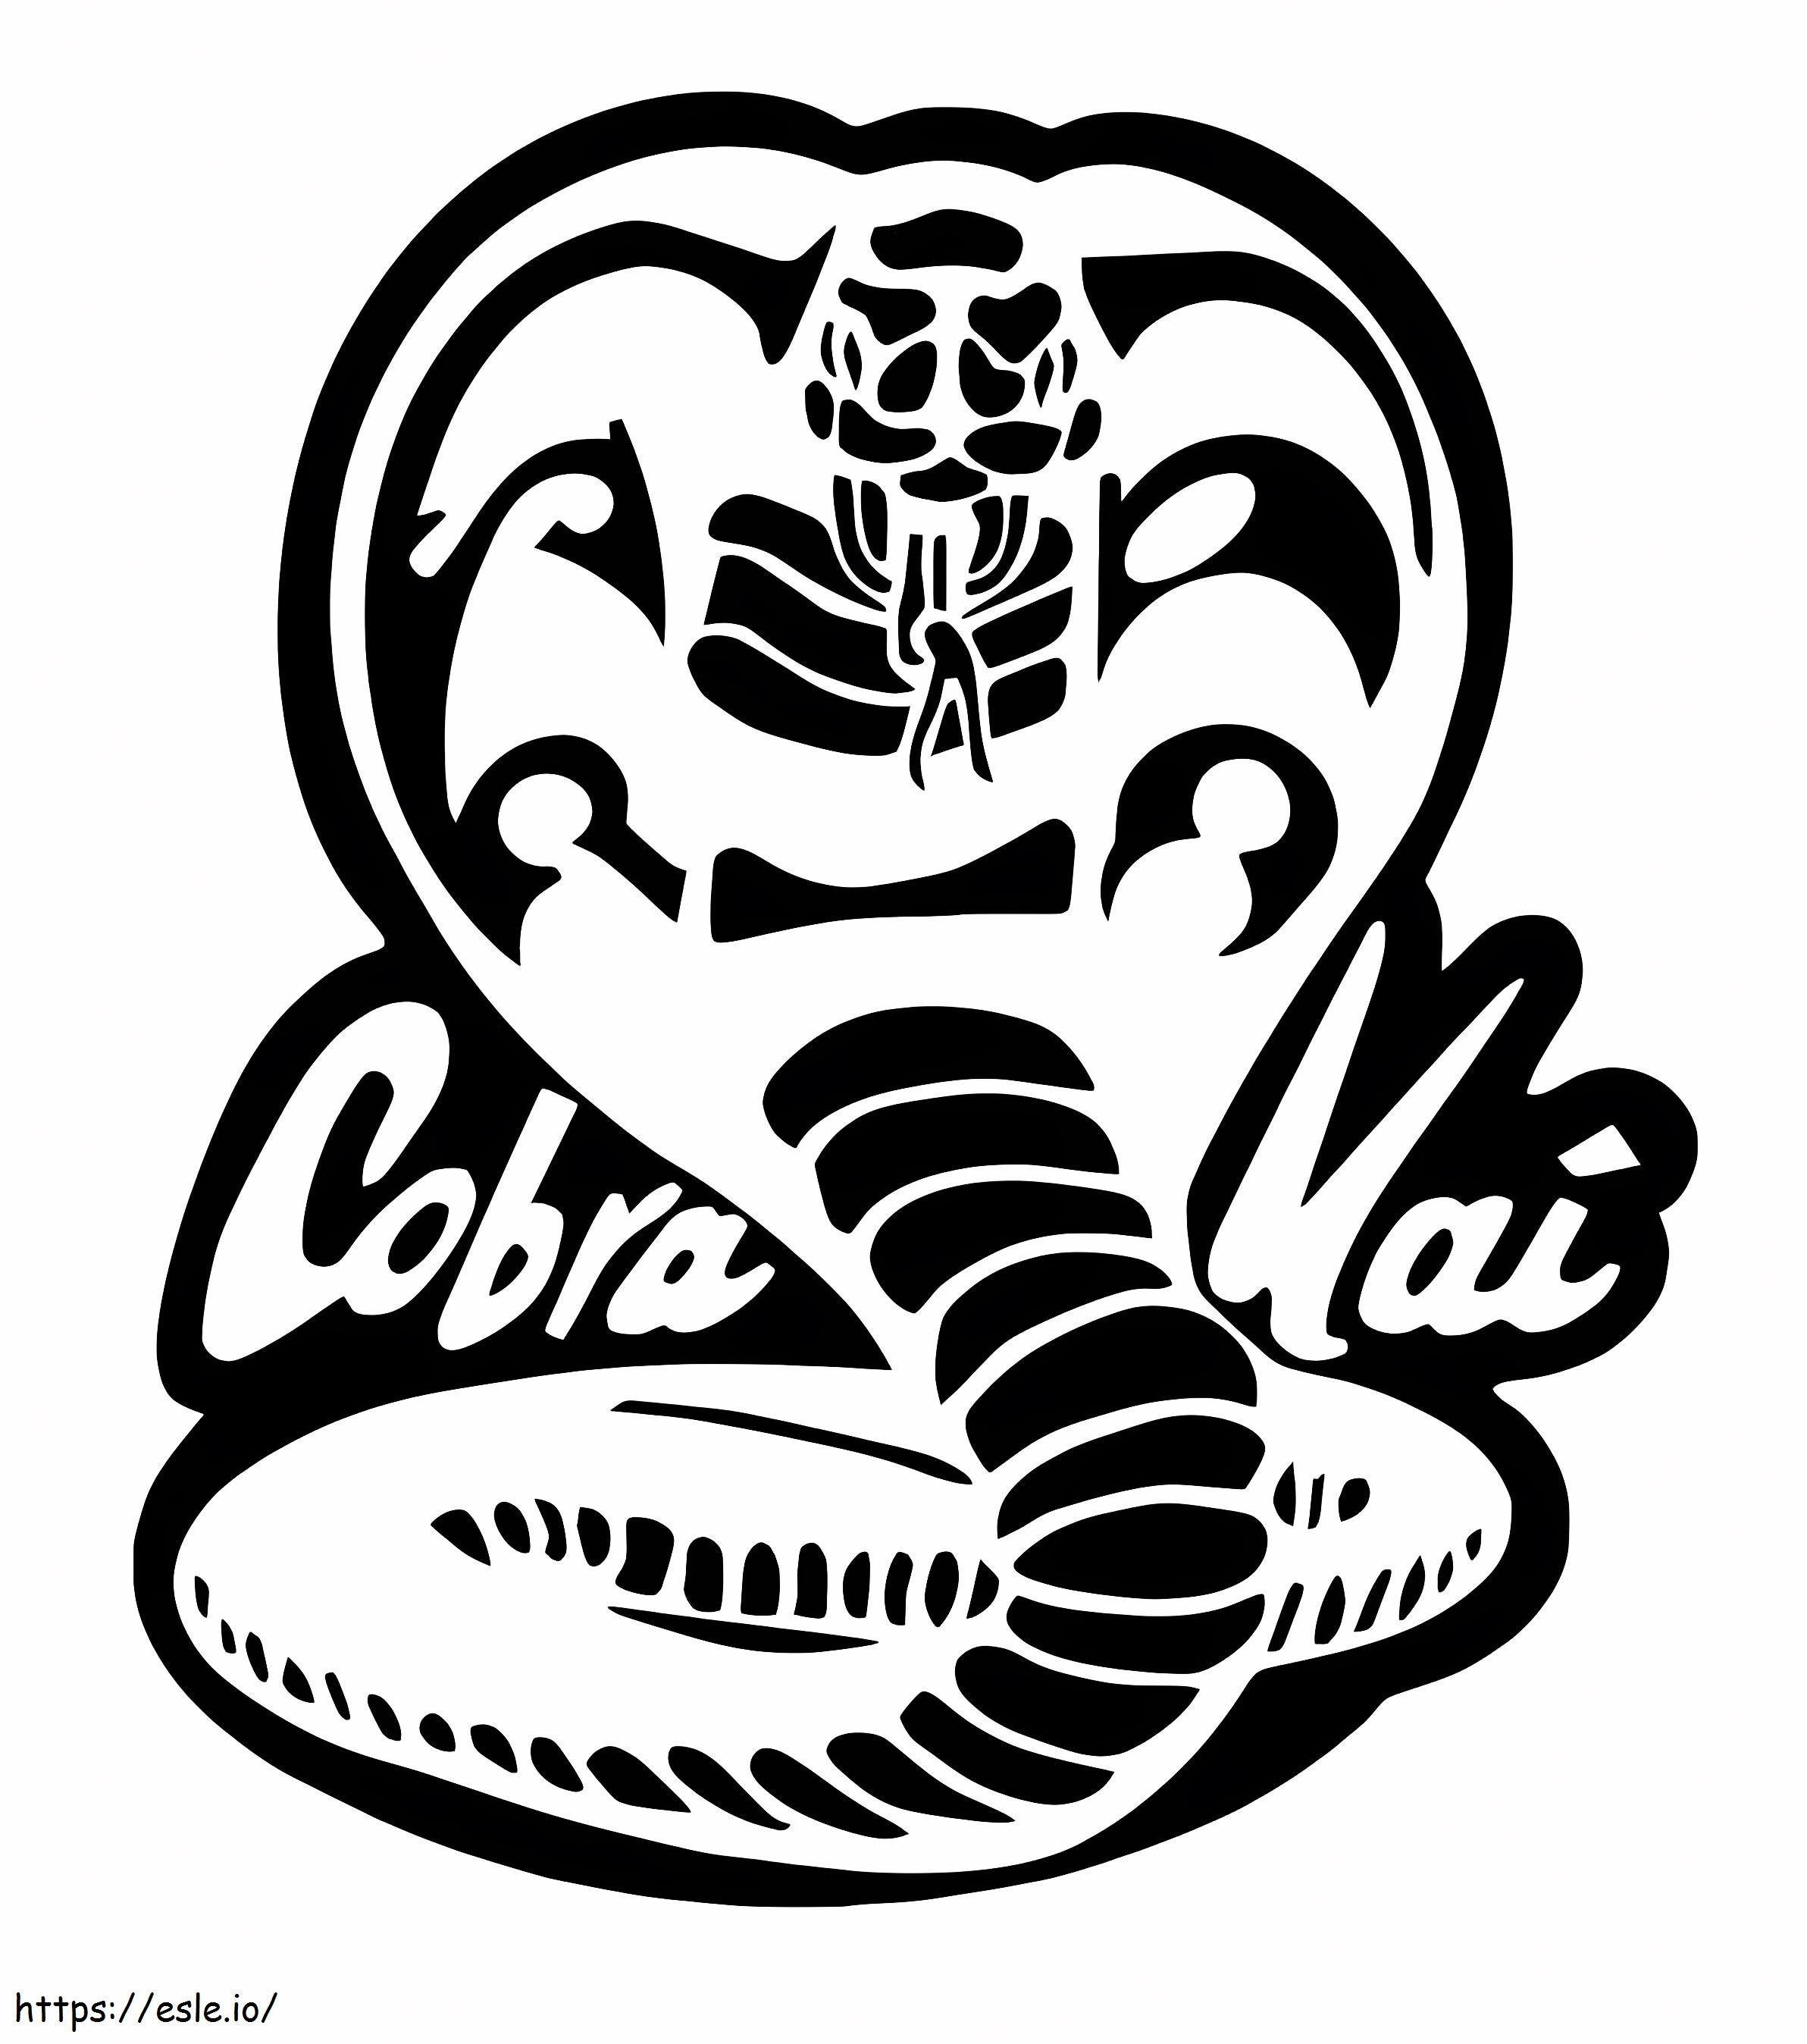 Cobra Kai-logo kleurplaat kleurplaat